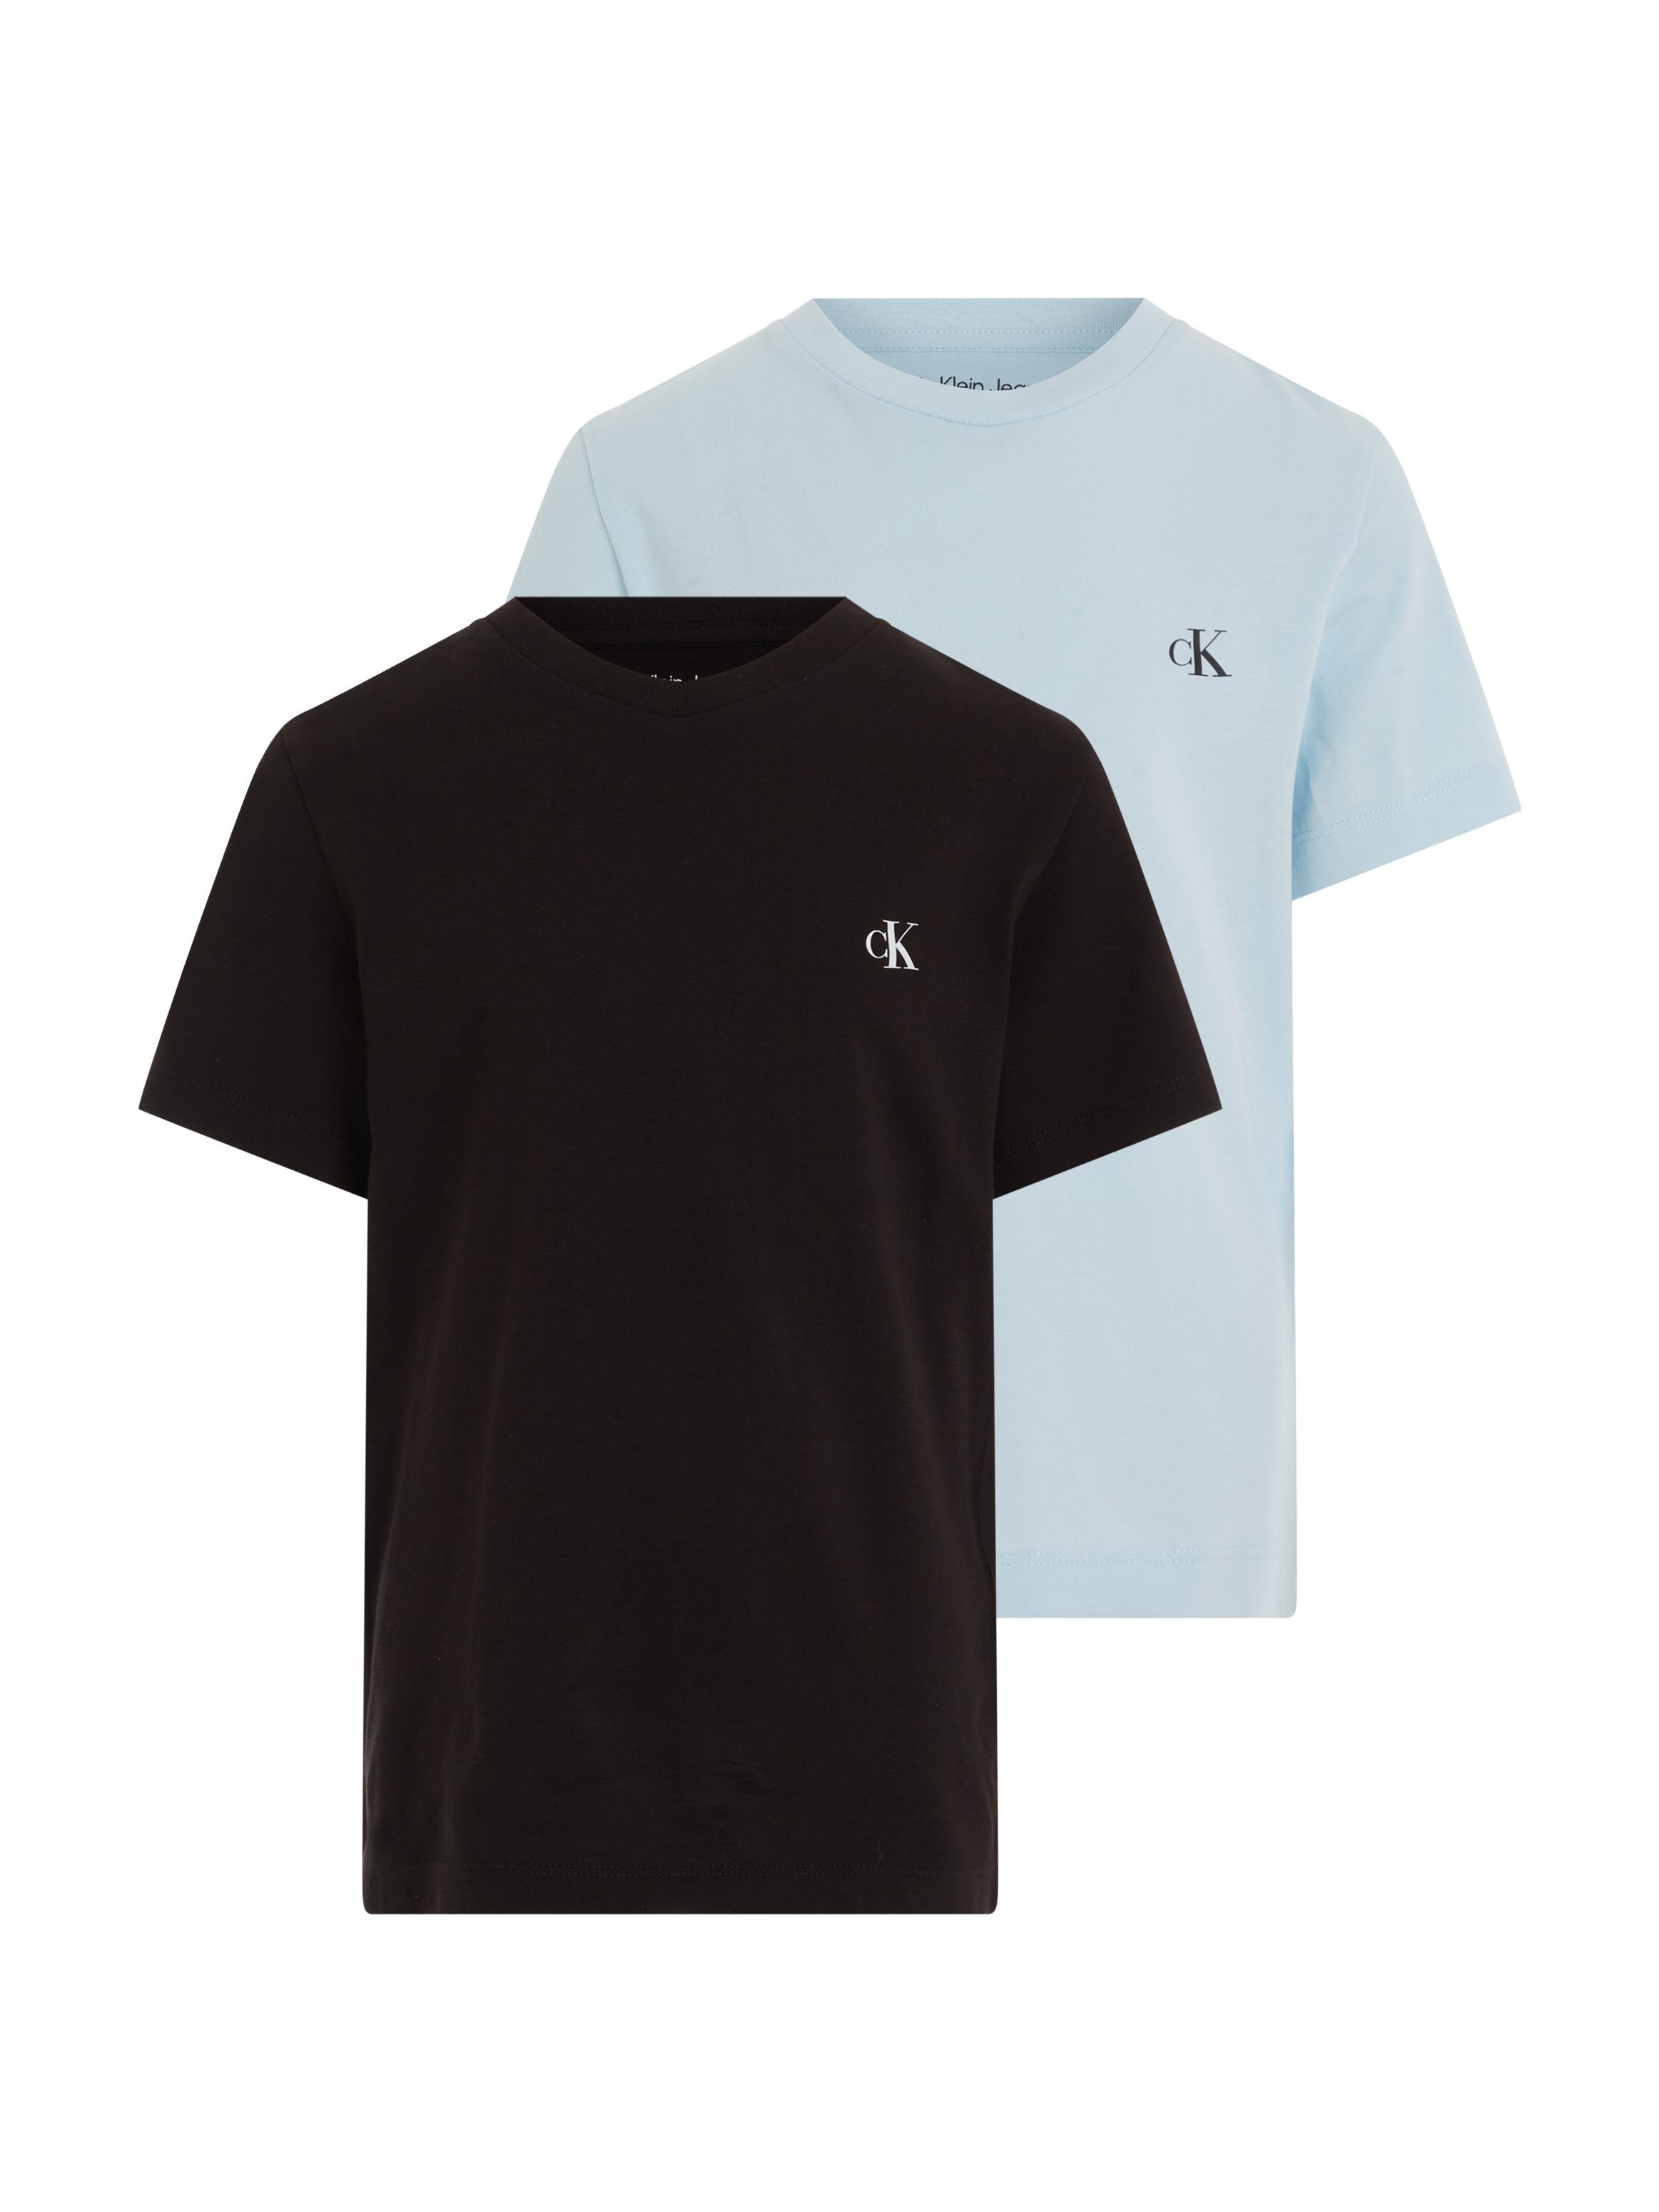 T-Shirt Jeans Calvin Keepsake TOP Blue 2-PACK MONOGRAM Klein / Black Logodruck Ck mit